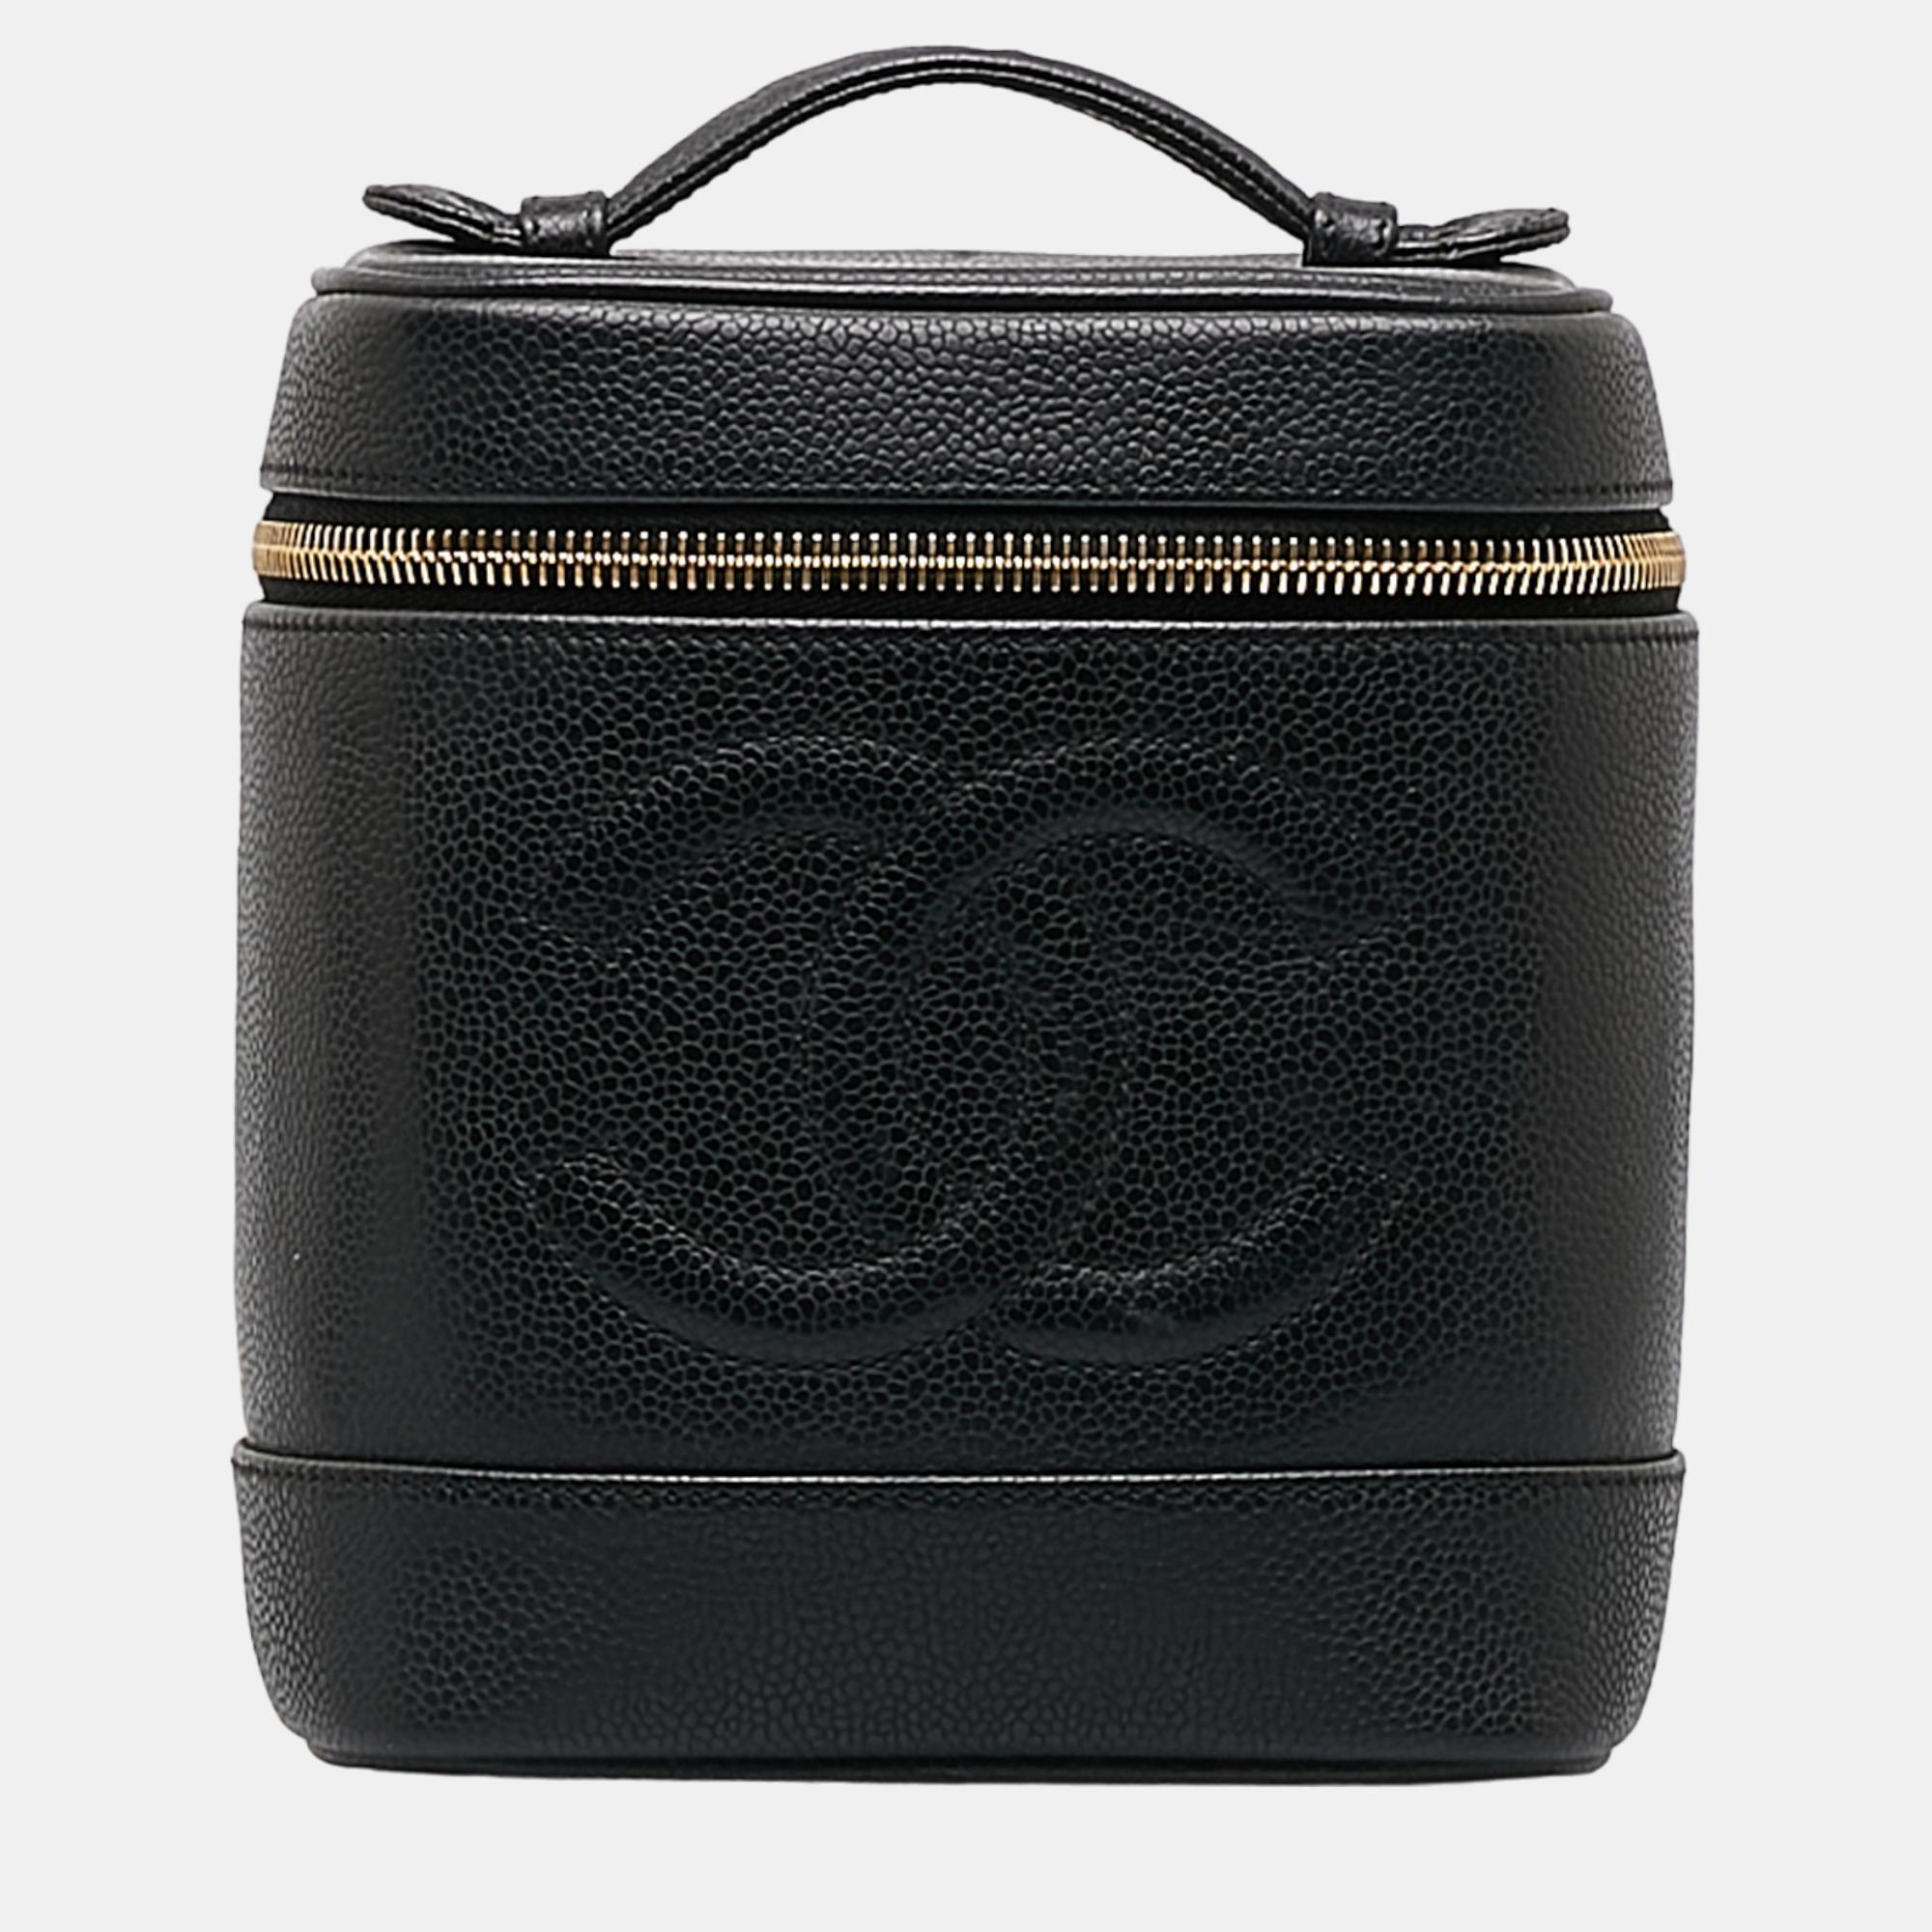 Chanel black cc caviar vanity bag